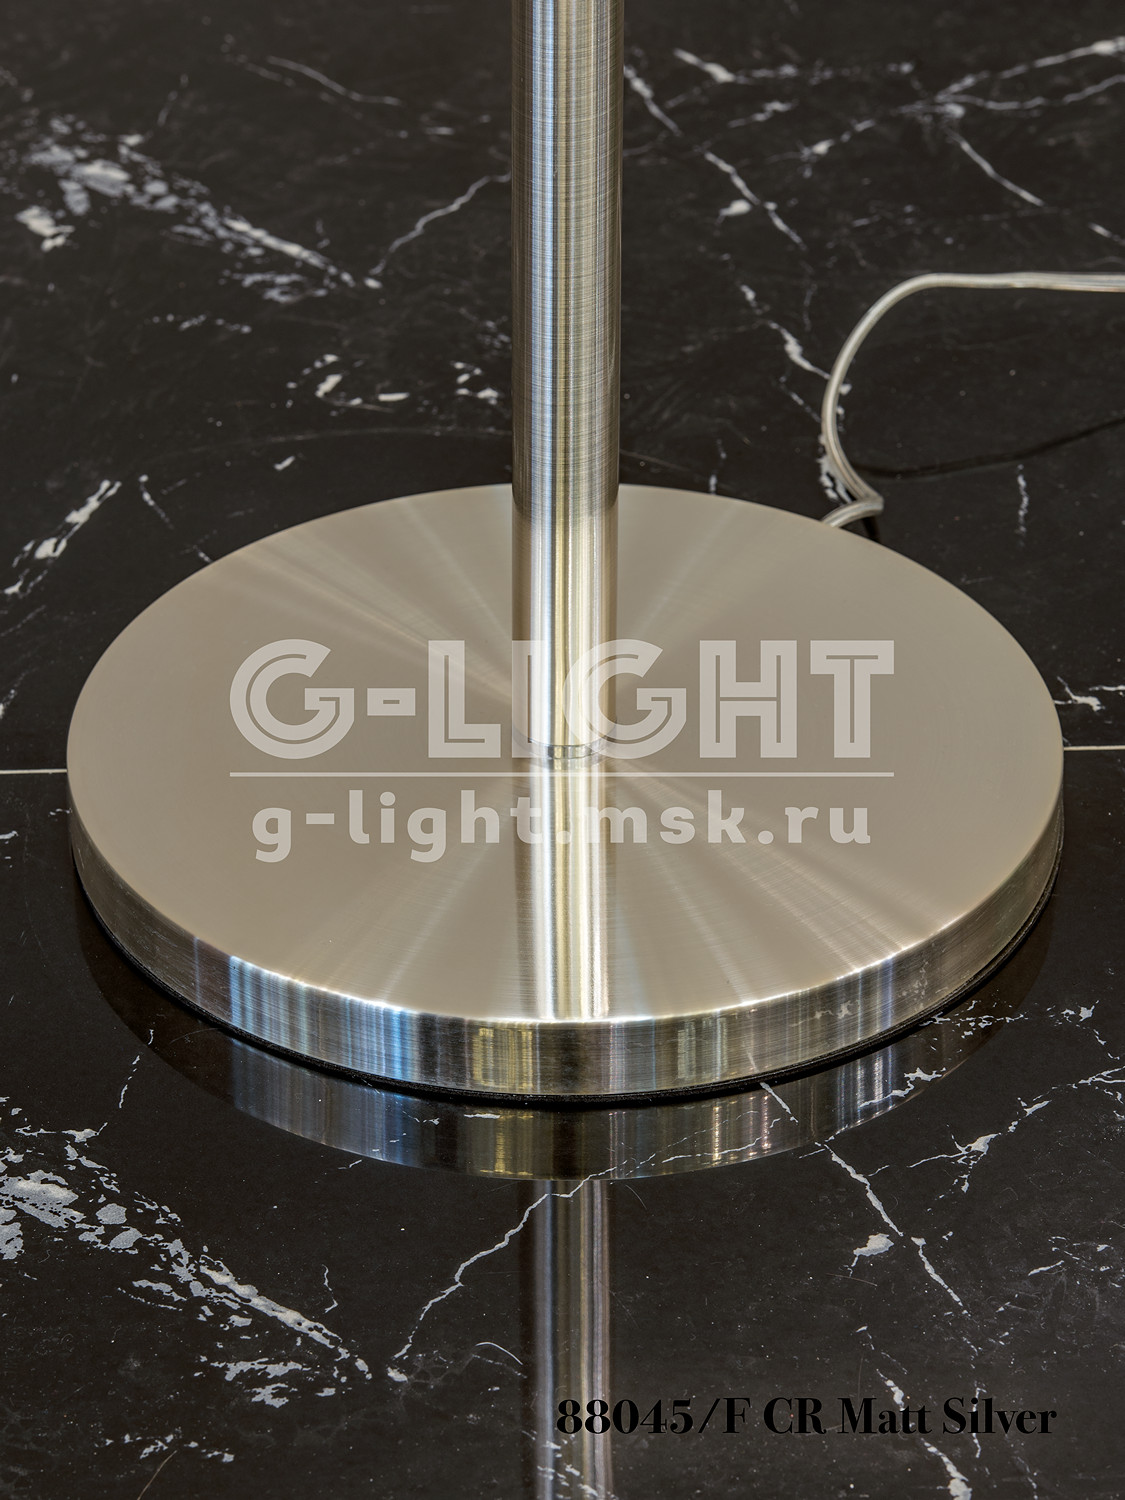 Торшер G-Light 88045/F CR Matt Silver - изображение 4